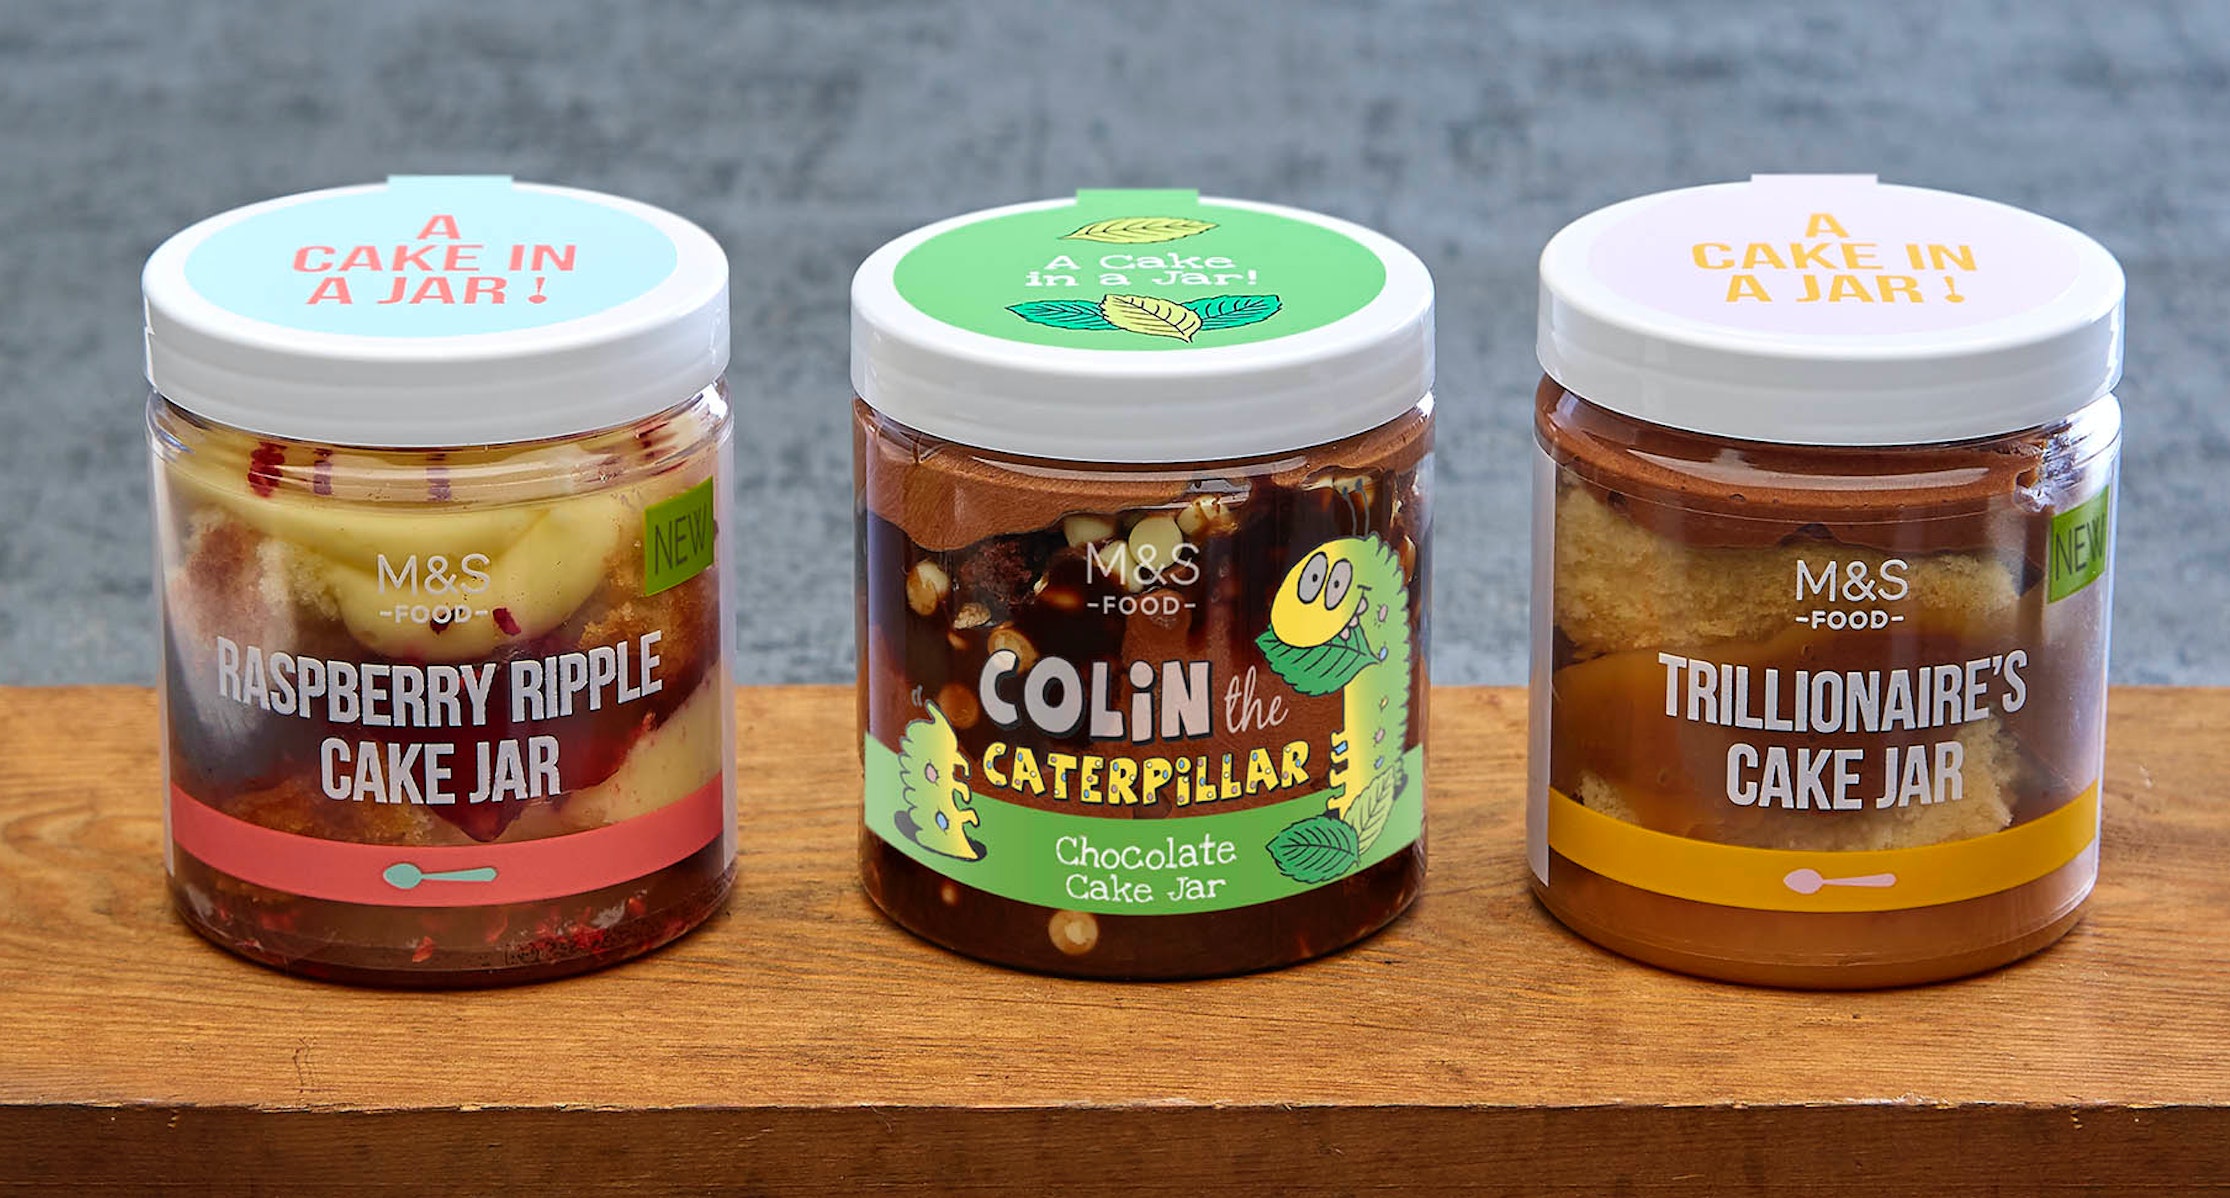 M&S verkoopt nu Colin The Caterpillar Cake in Jars